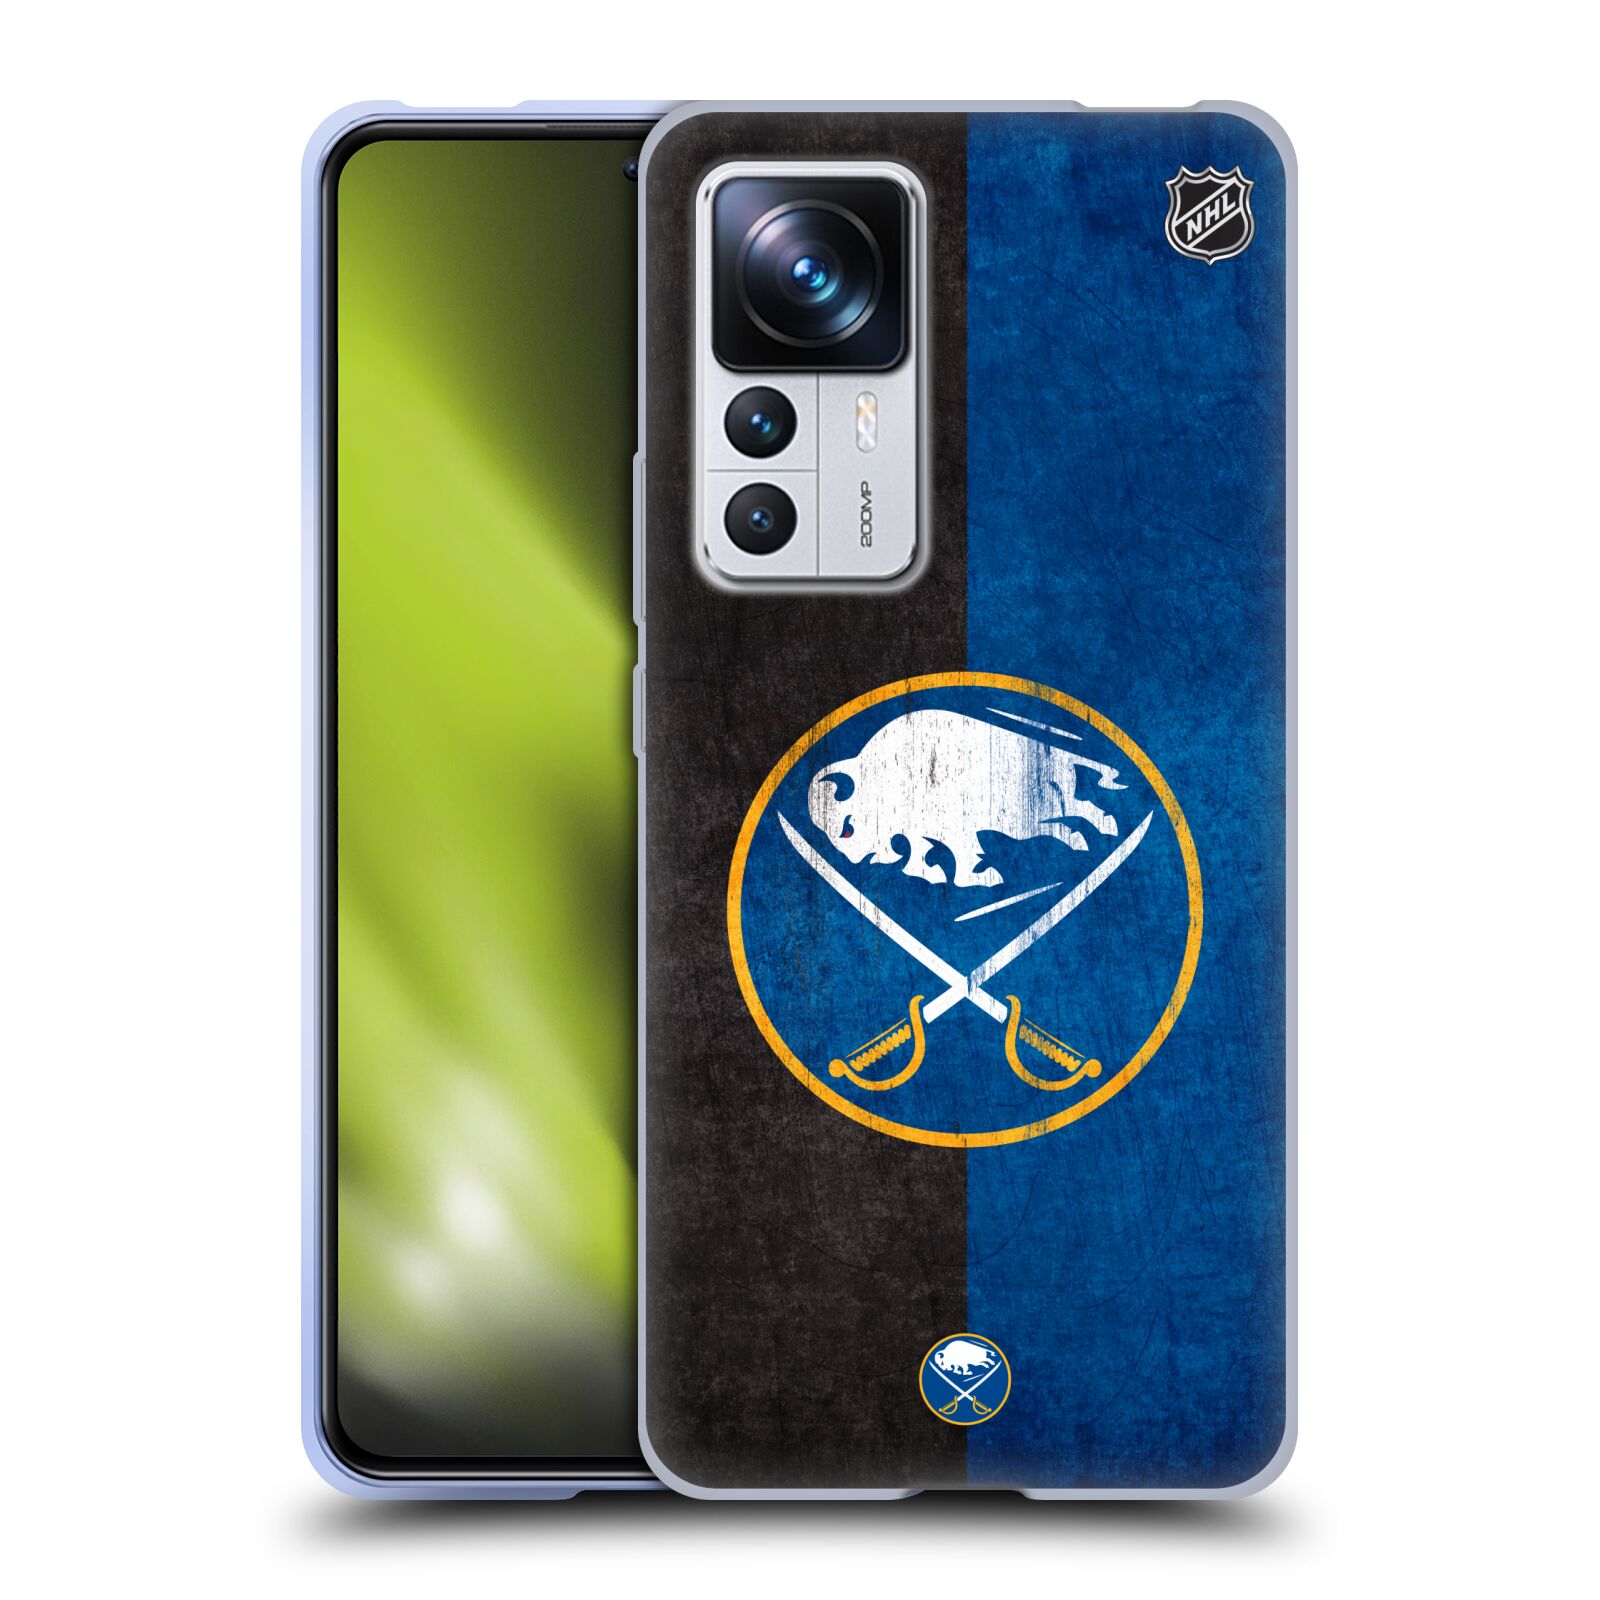 Silikonové pouzdro na mobil Xiaomi 12T / 12T Pro - NHL - Půlené logo Buffalo Sabres (Silikonový kryt, obal, pouzdro na mobilní telefon Xiaomi 12T / 12T Pro s licencovaným motivem NHL - Půlené logo Buffalo Sabres)